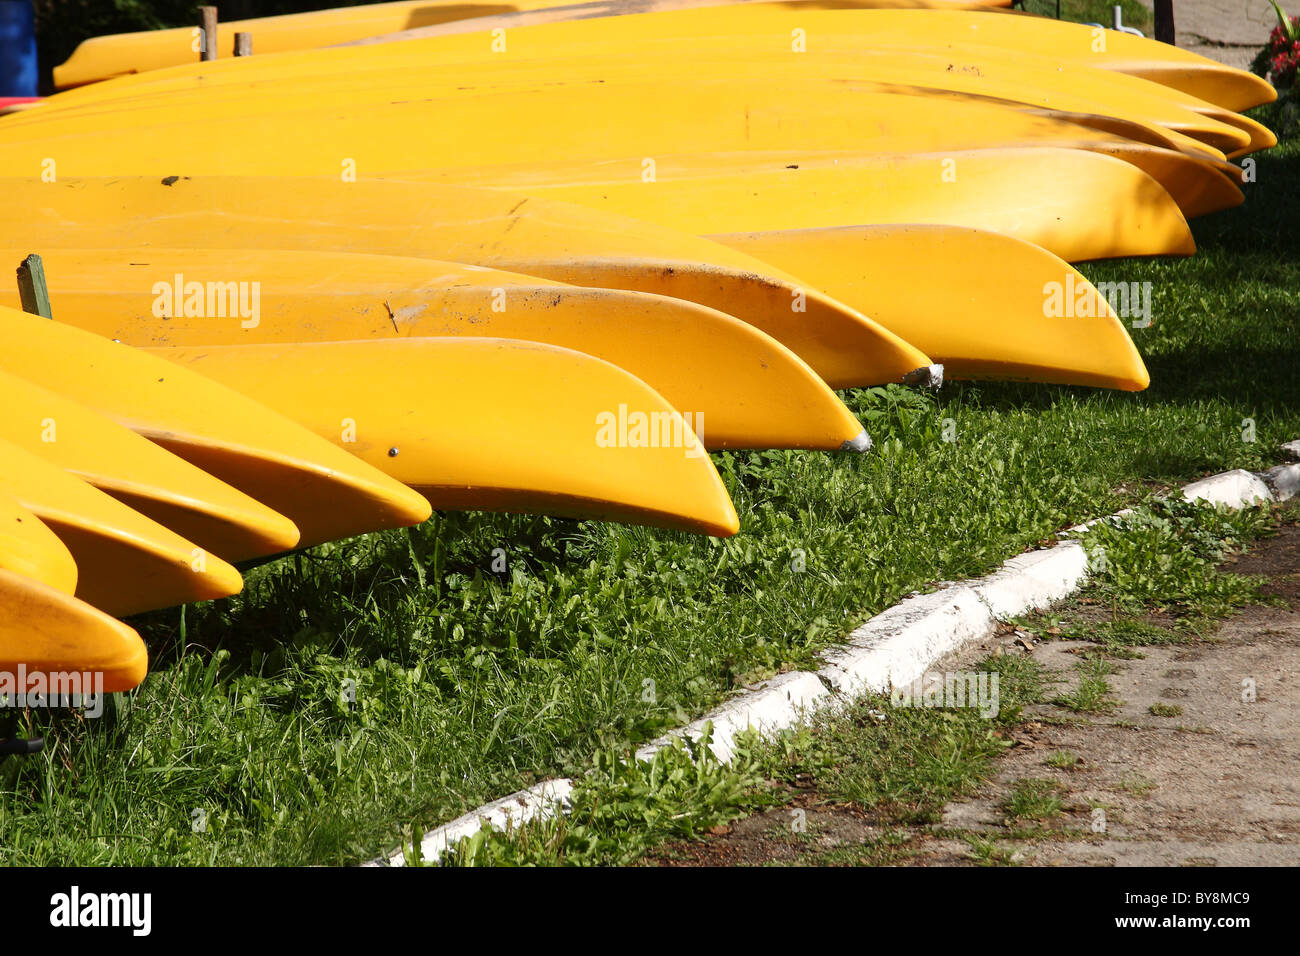 Row of yellow kayaks for rent. Wdzydze, Kashubia, Poland. Stock Photo